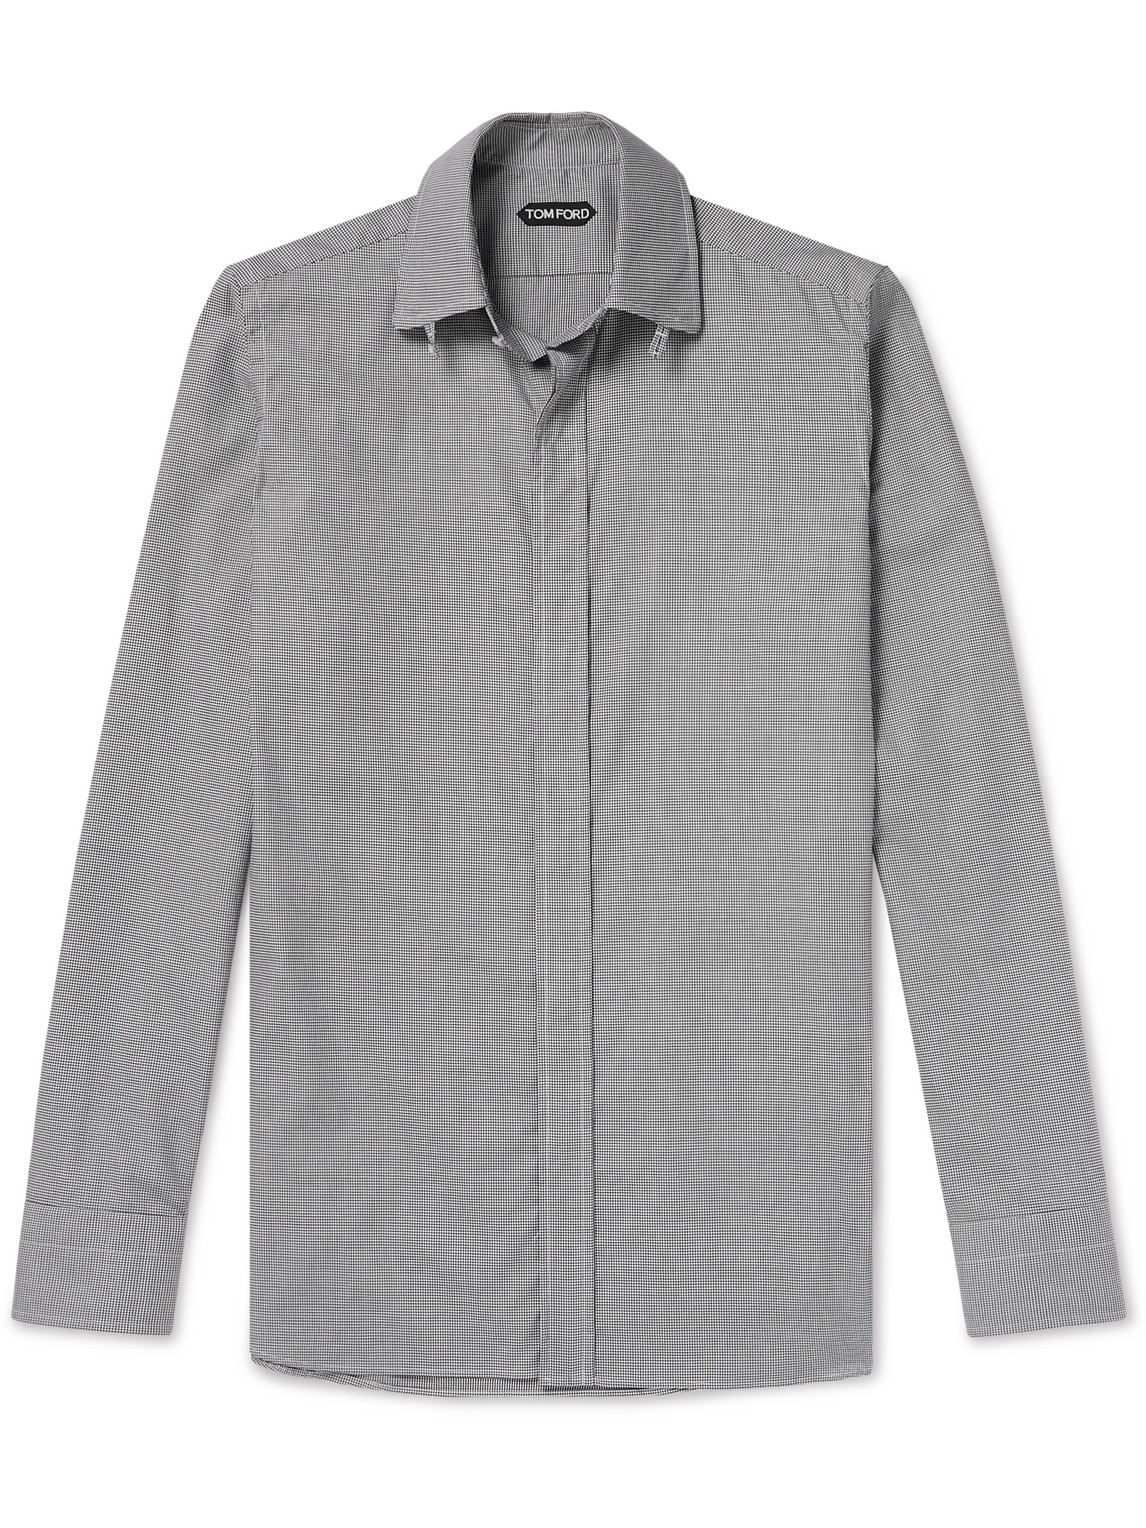 TOM FORD - Slim-Fit Gingham Cotton-Poplin Shirt - Men - Gray - EU 39 von TOM FORD